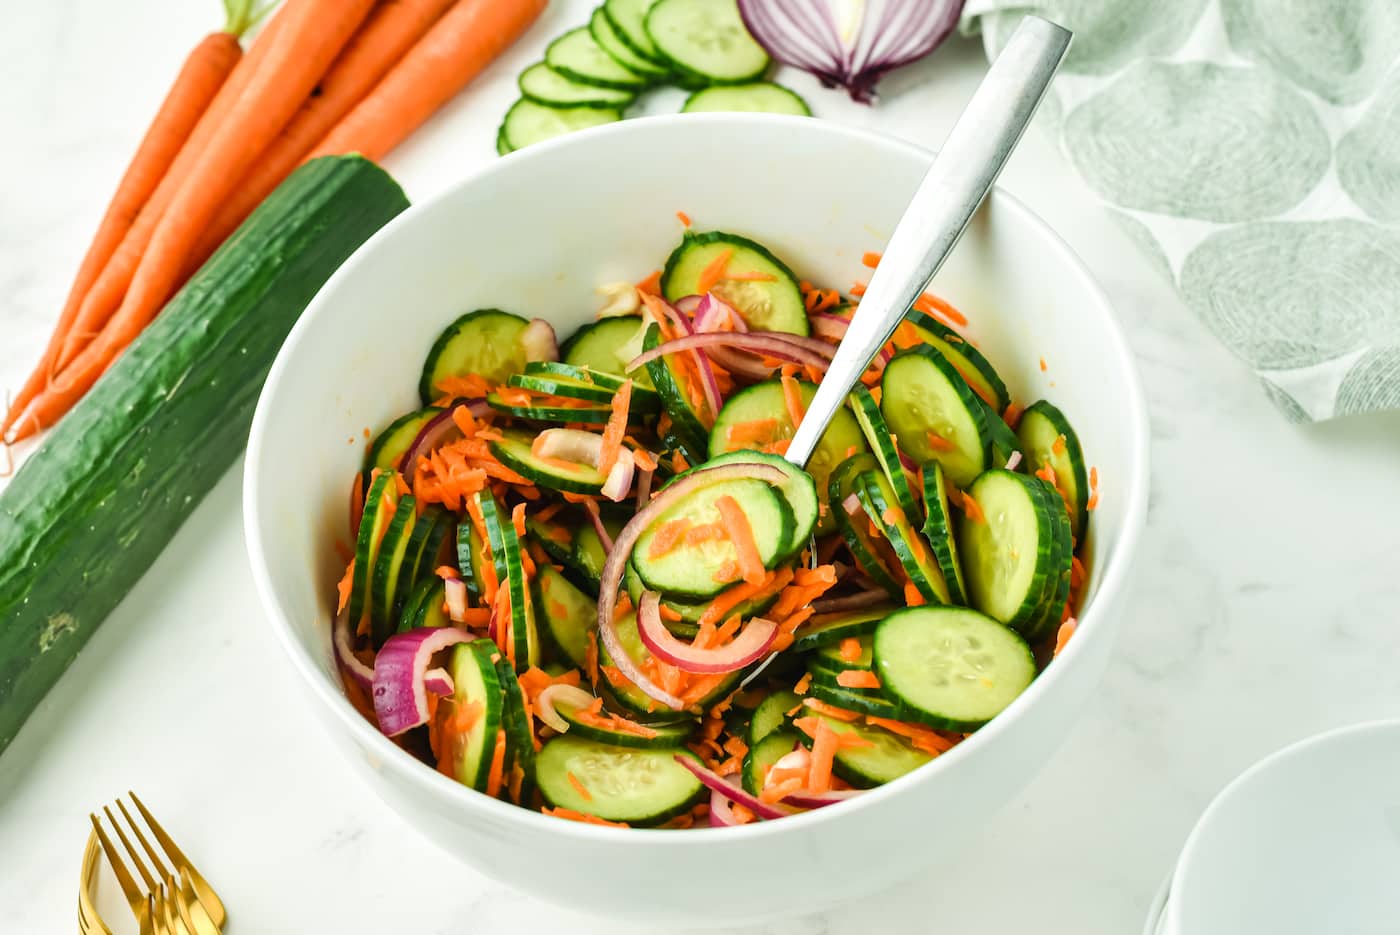 https://www.cleaneatingkitchen.com/wp-content/uploads/2022/05/carrot-cucumber-salad-hero.jpg